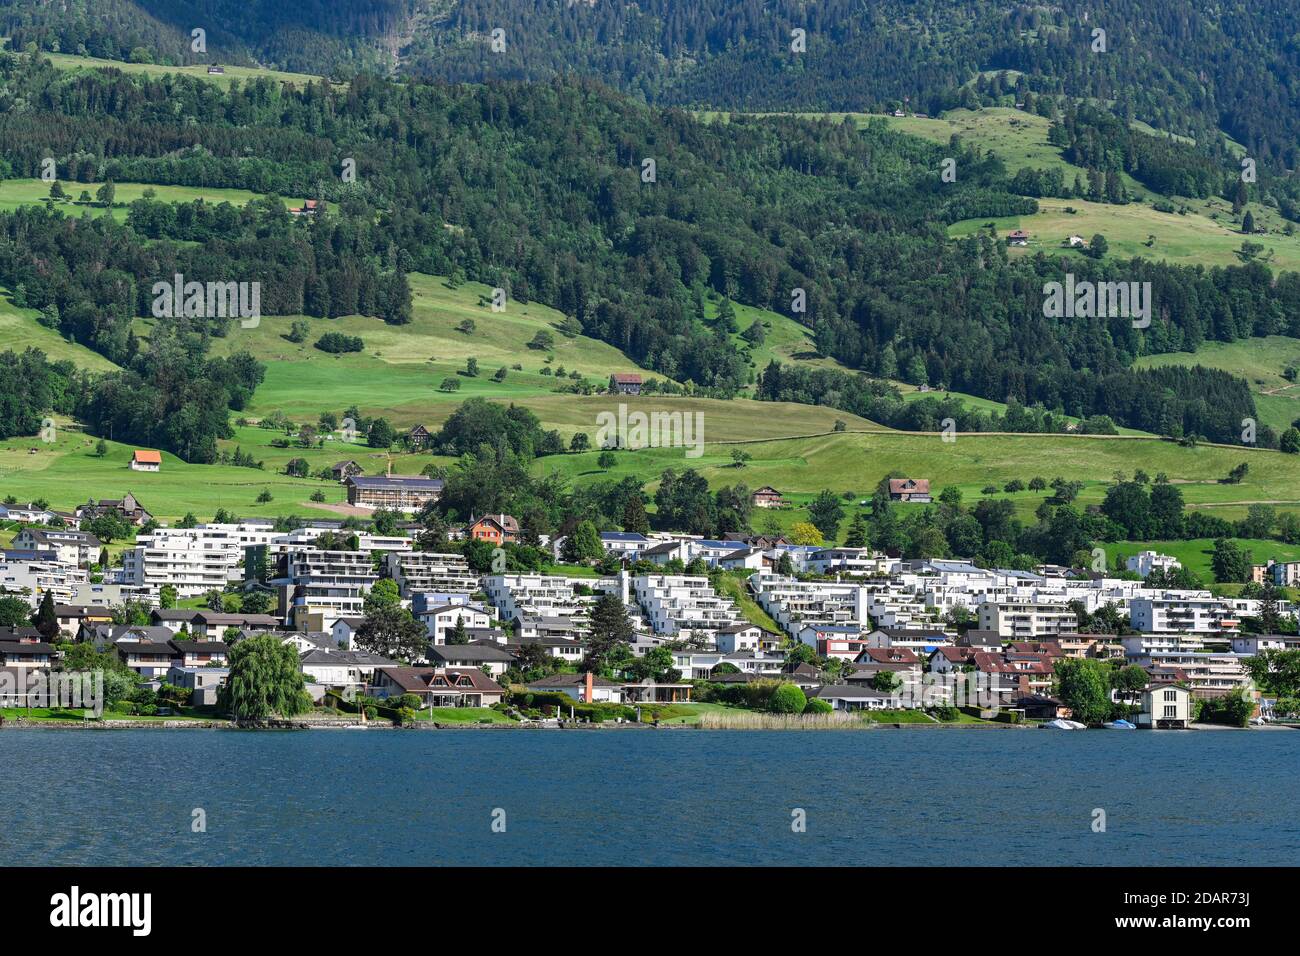 Housing development with lake access Lake Lucerne, Kuessnacht am Rigi, Switzerland Stock Photo